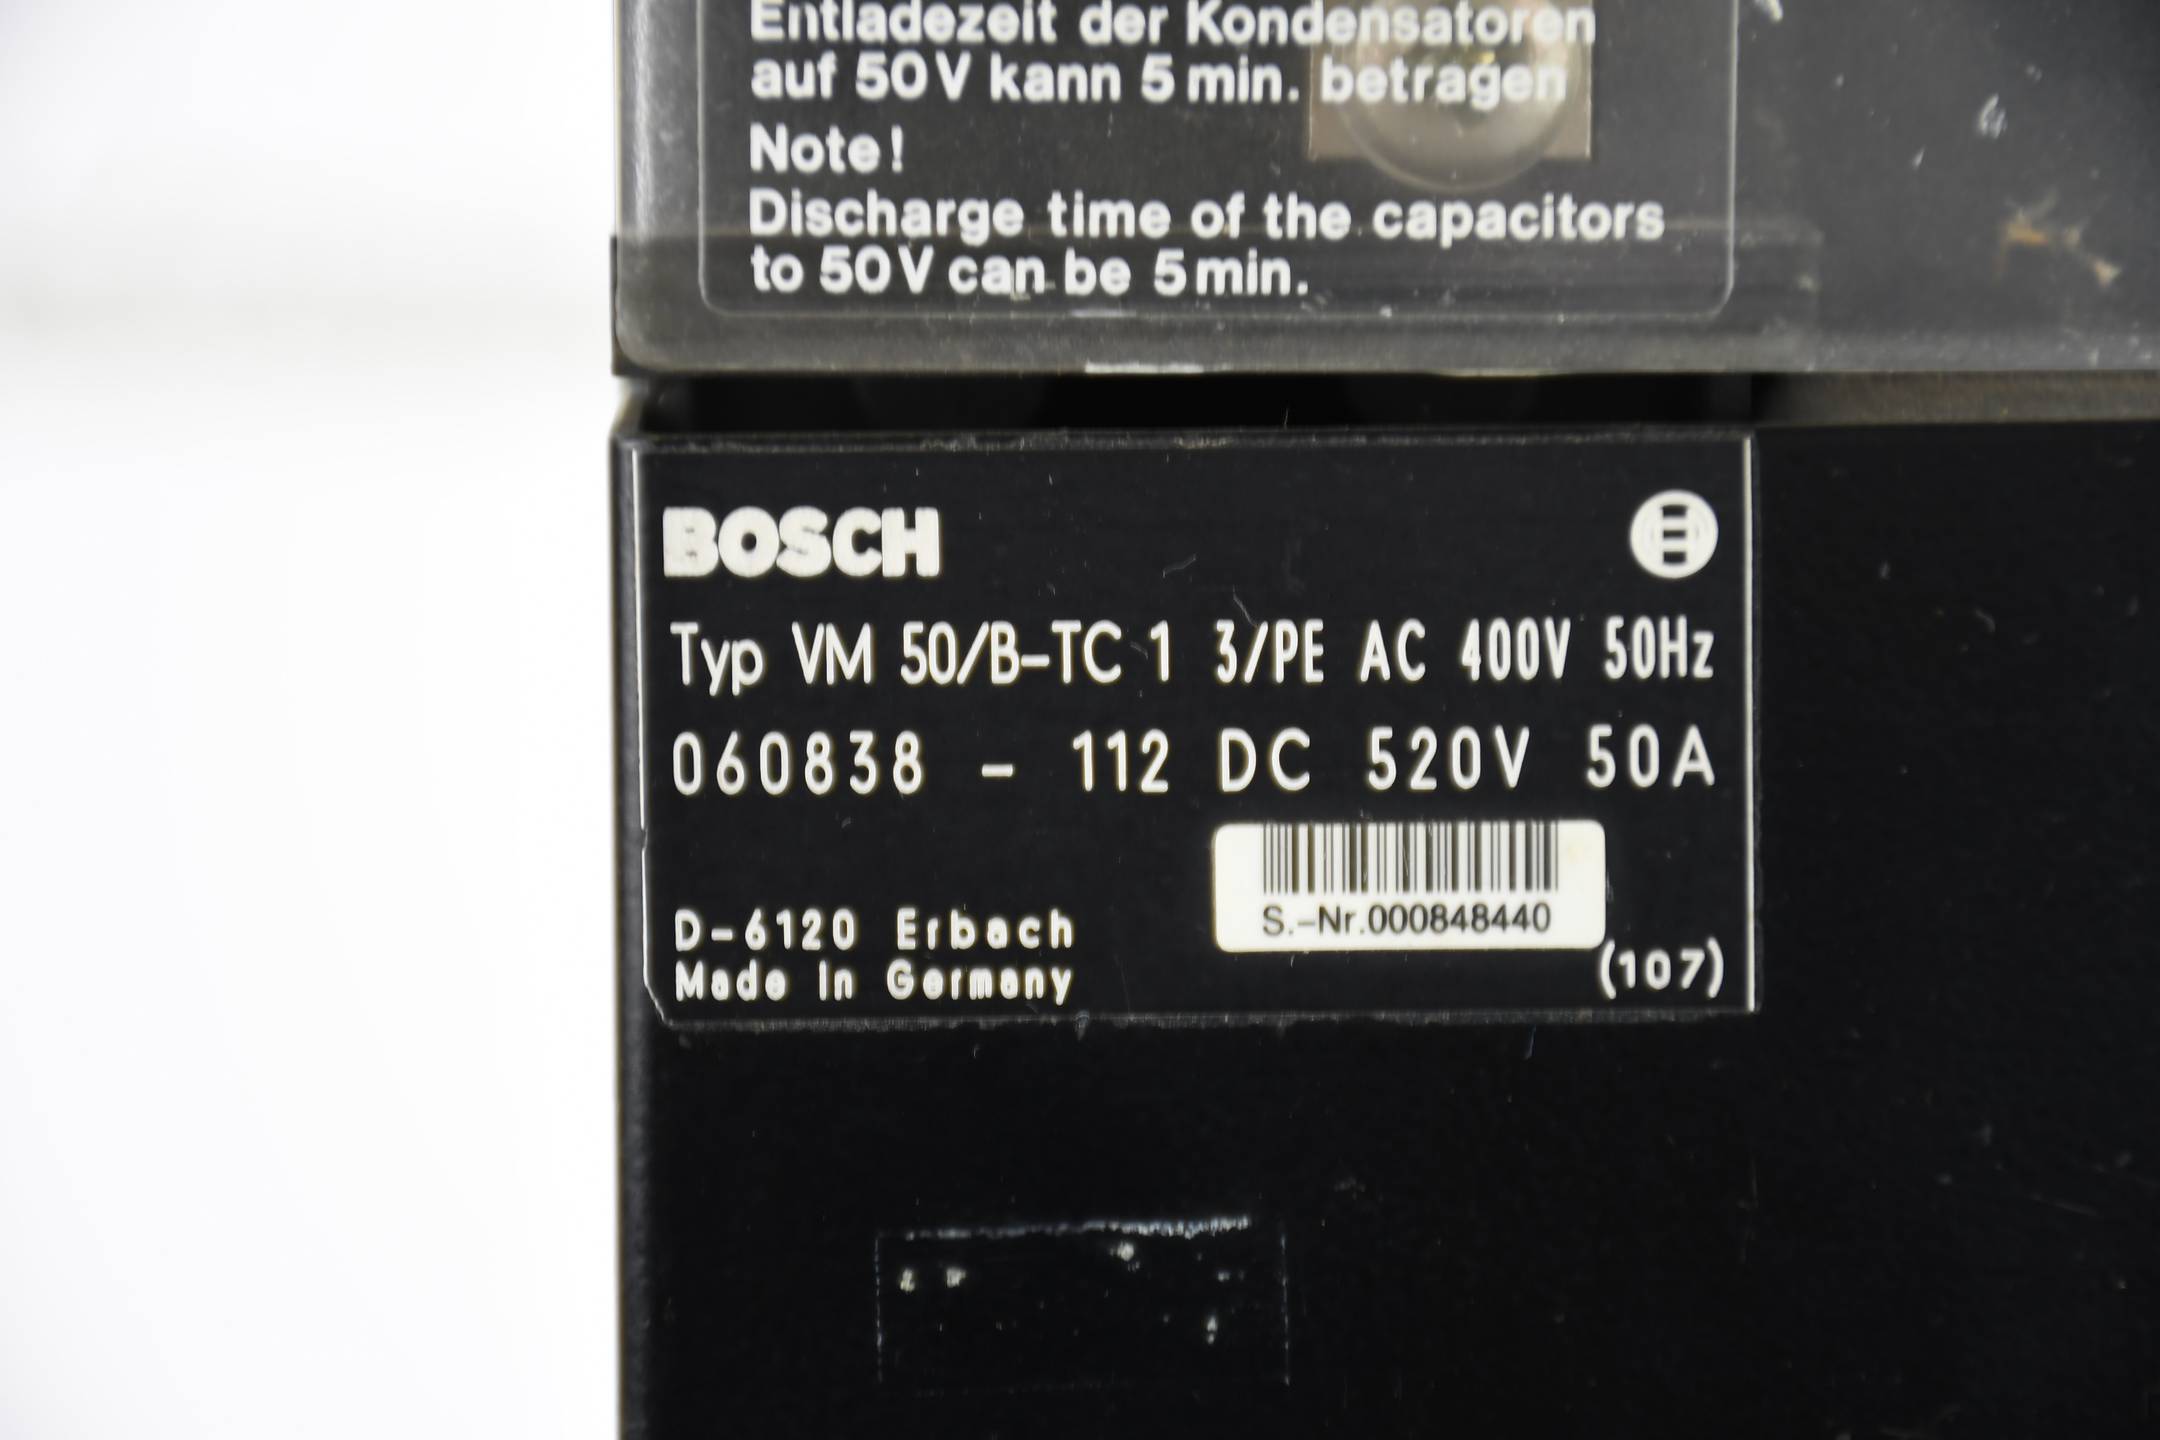 Bosch Rexroth Indramat VM50 Versorgungsmodul VM 50/B-TC 1 ( 060838 -112 )
